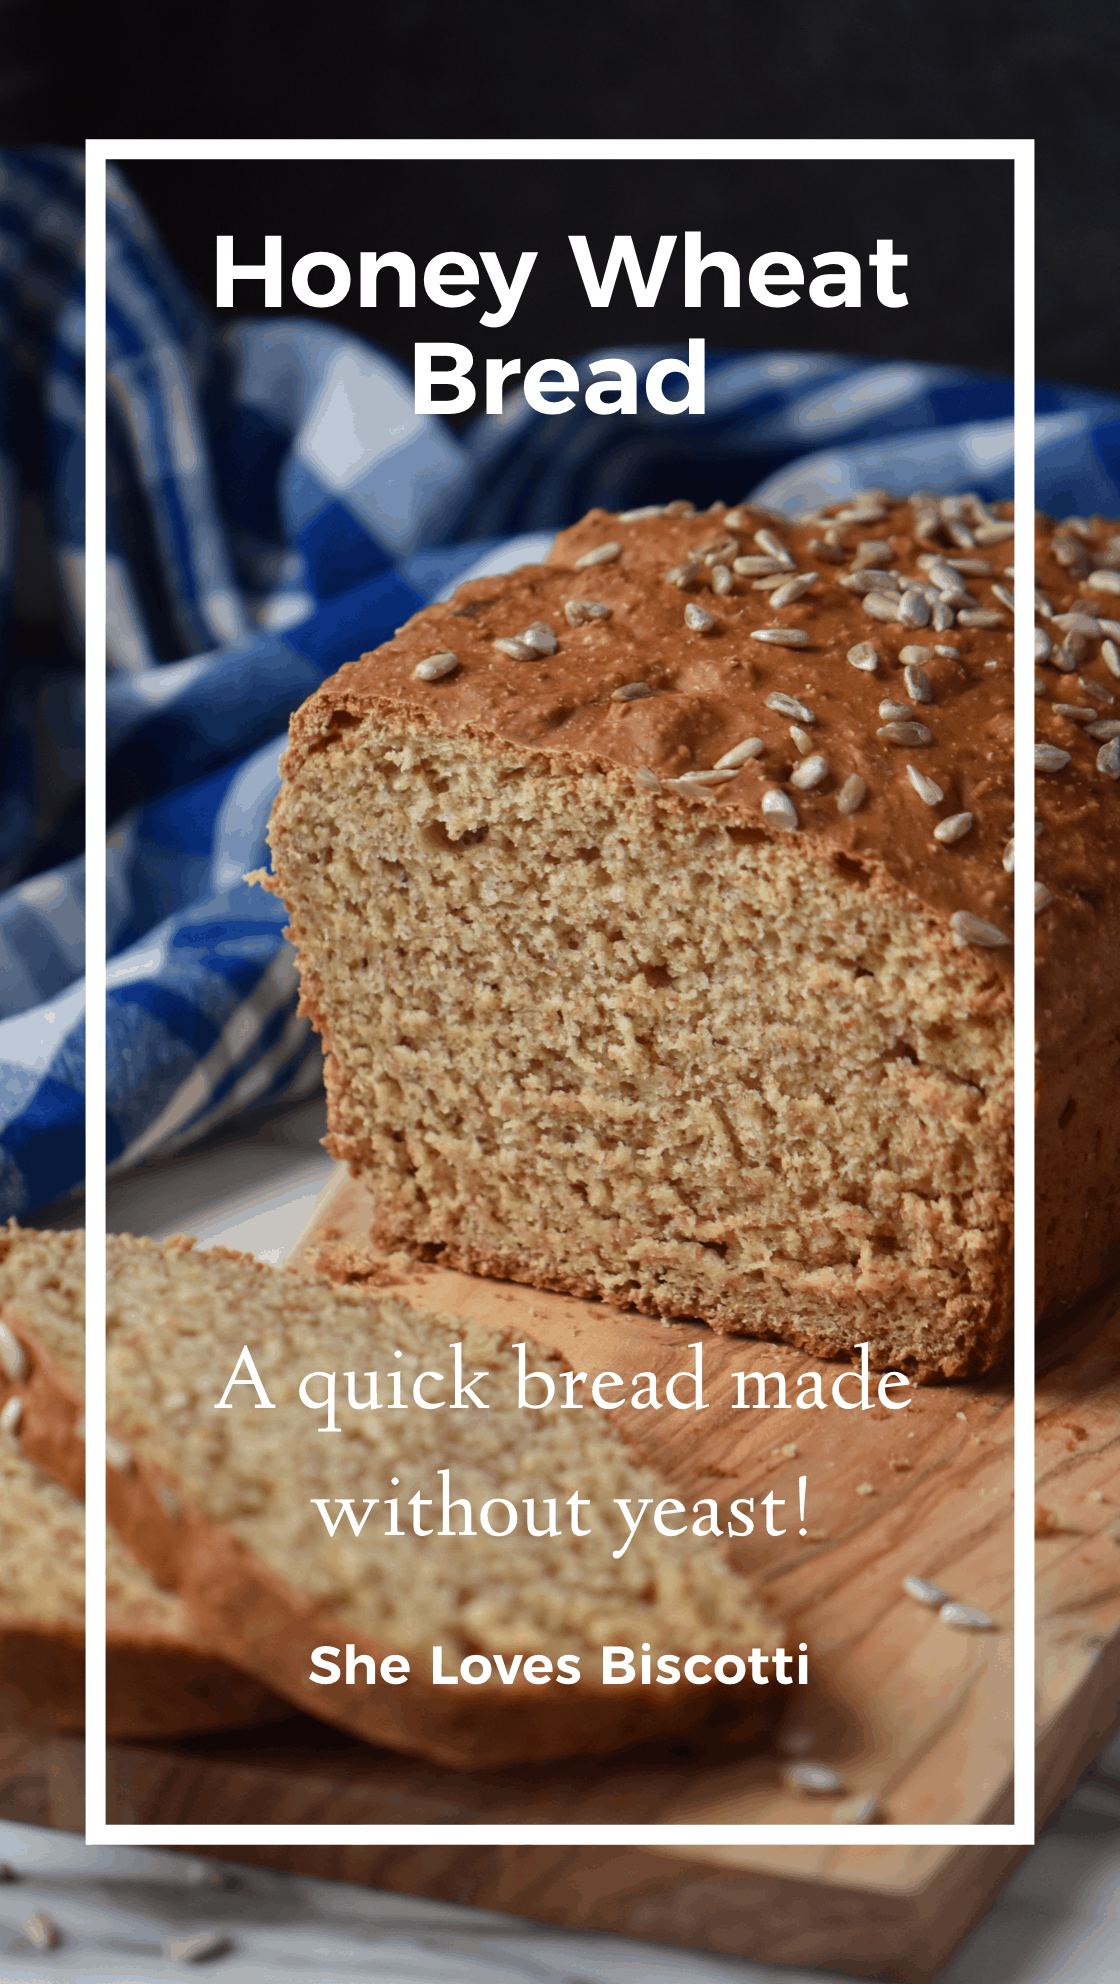 Honey Wheat Bread: Yeast Free! - She Loves Biscotti